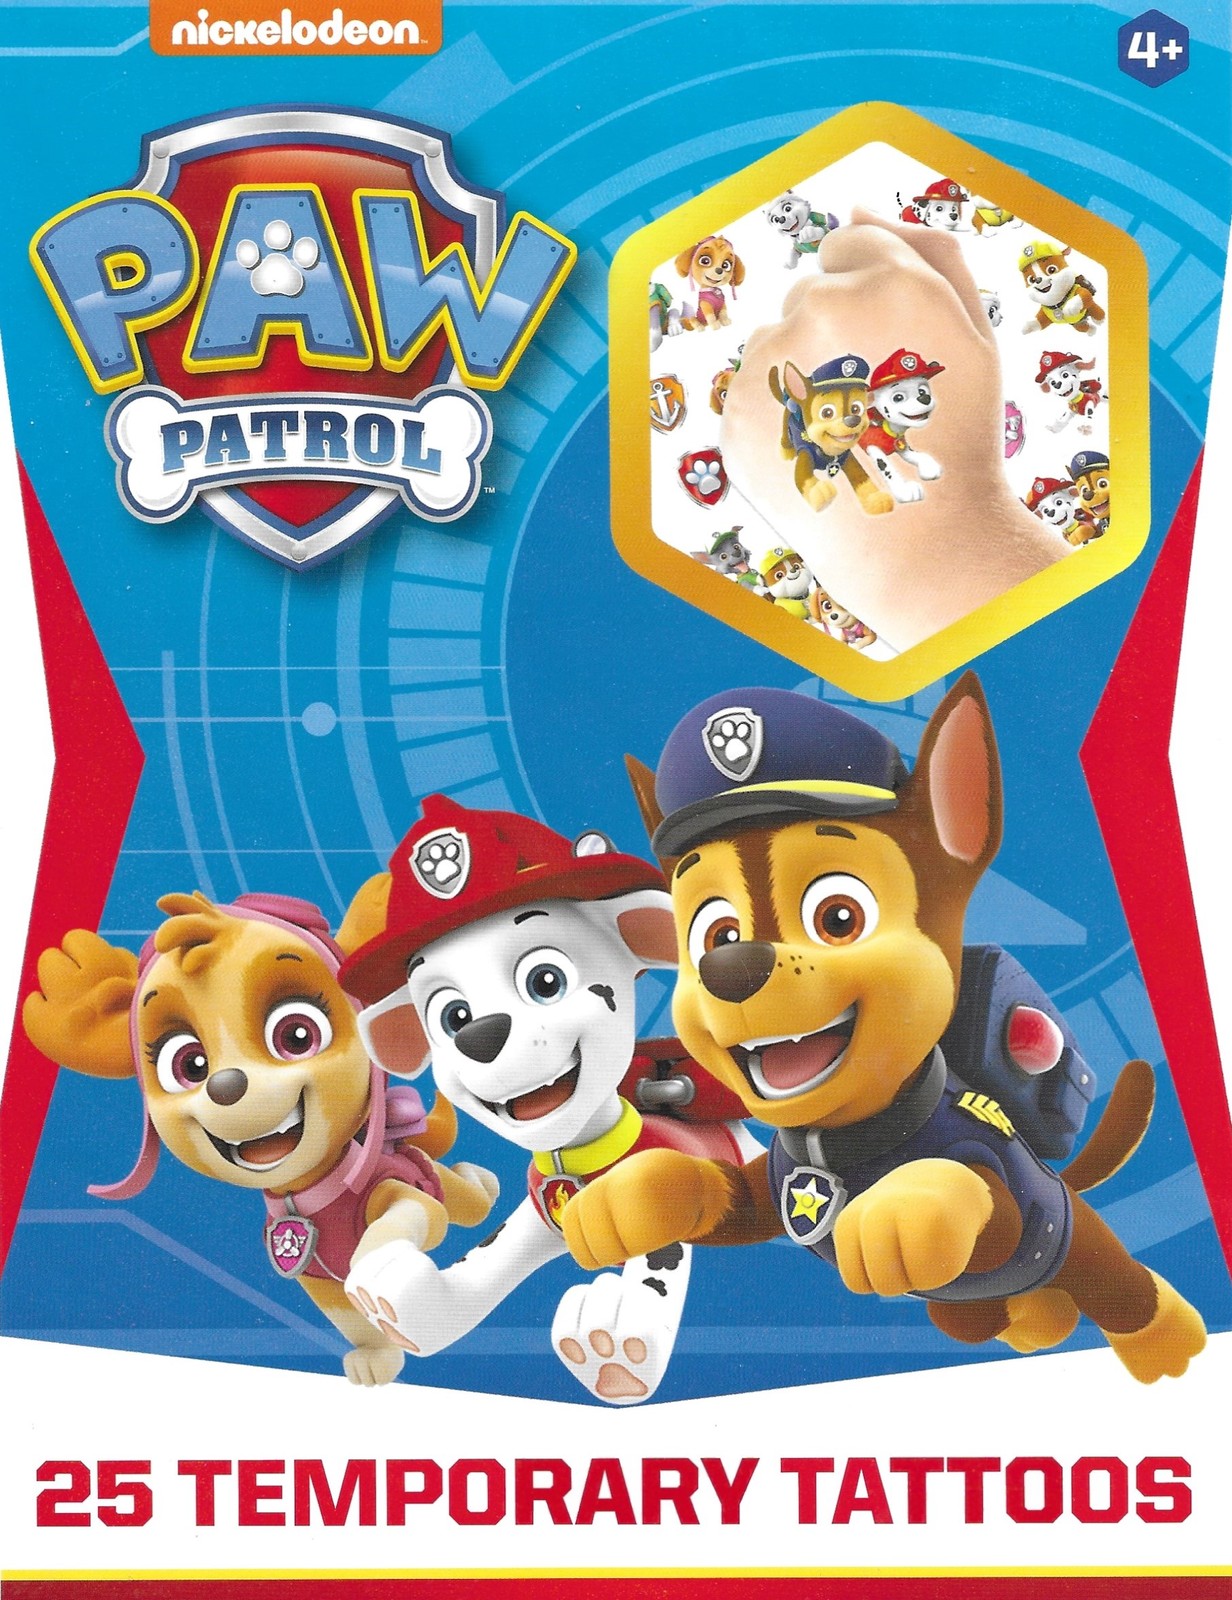 Paw patrol tattoos 25ct